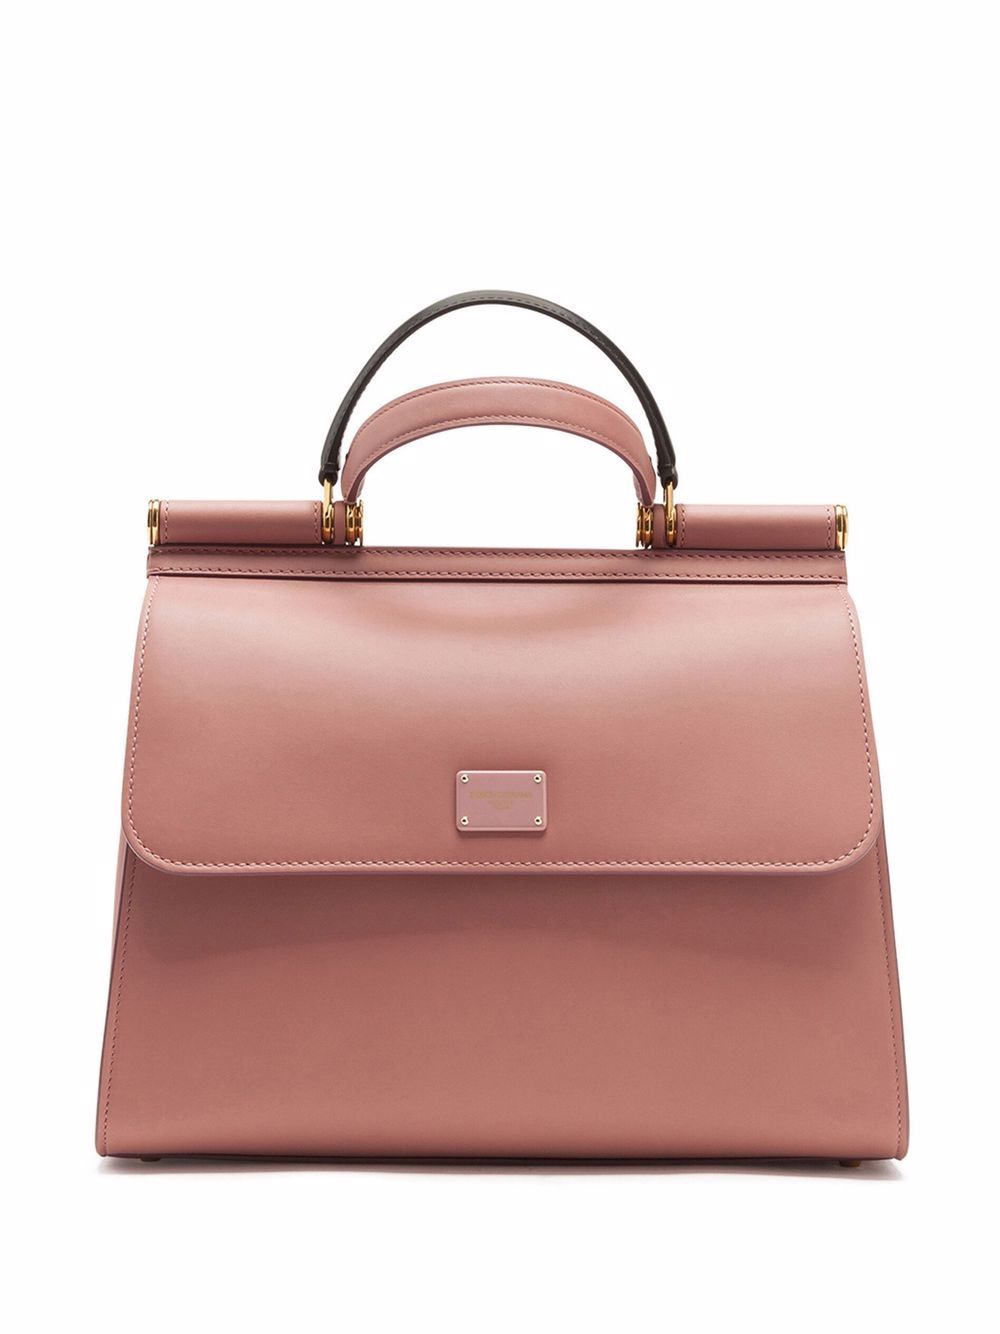 Pre-owned Dior Saddle Pink Patent Leather Handbag, ModeSens